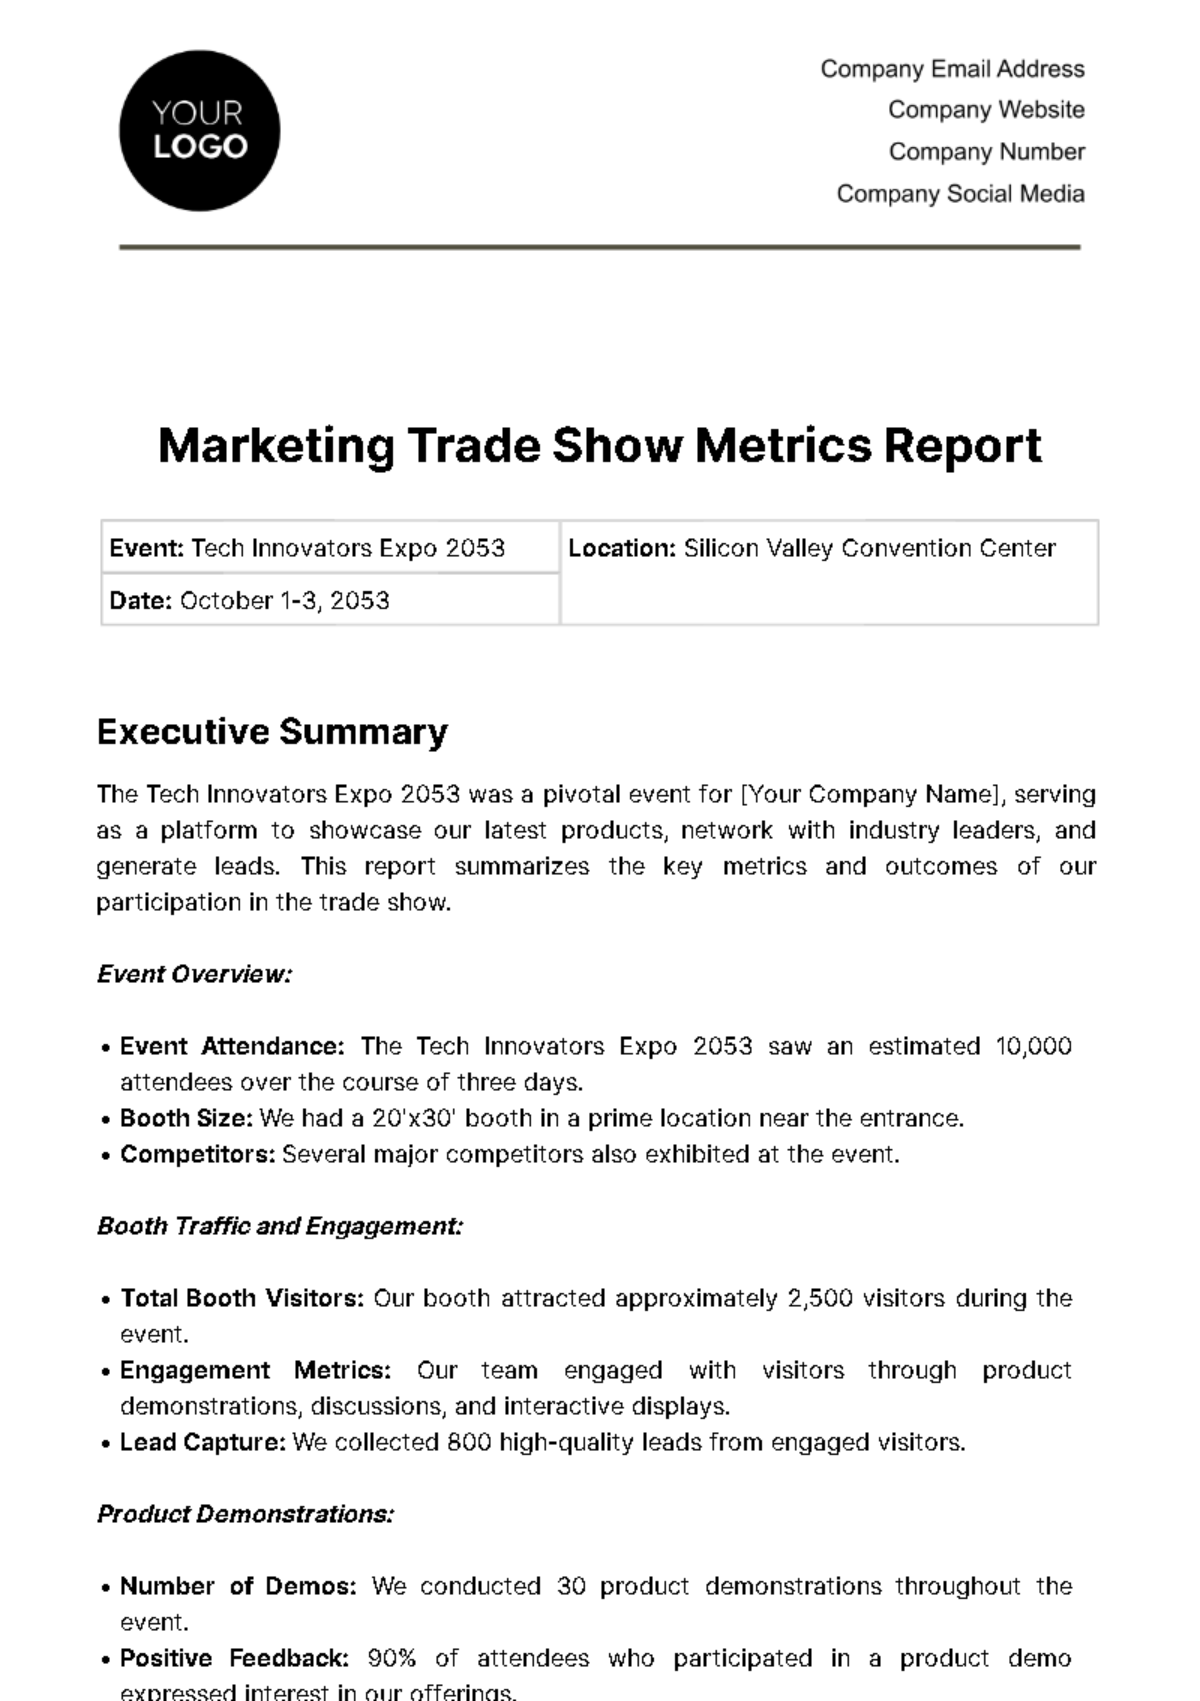 Marketing Trade Show Metrics Report Template